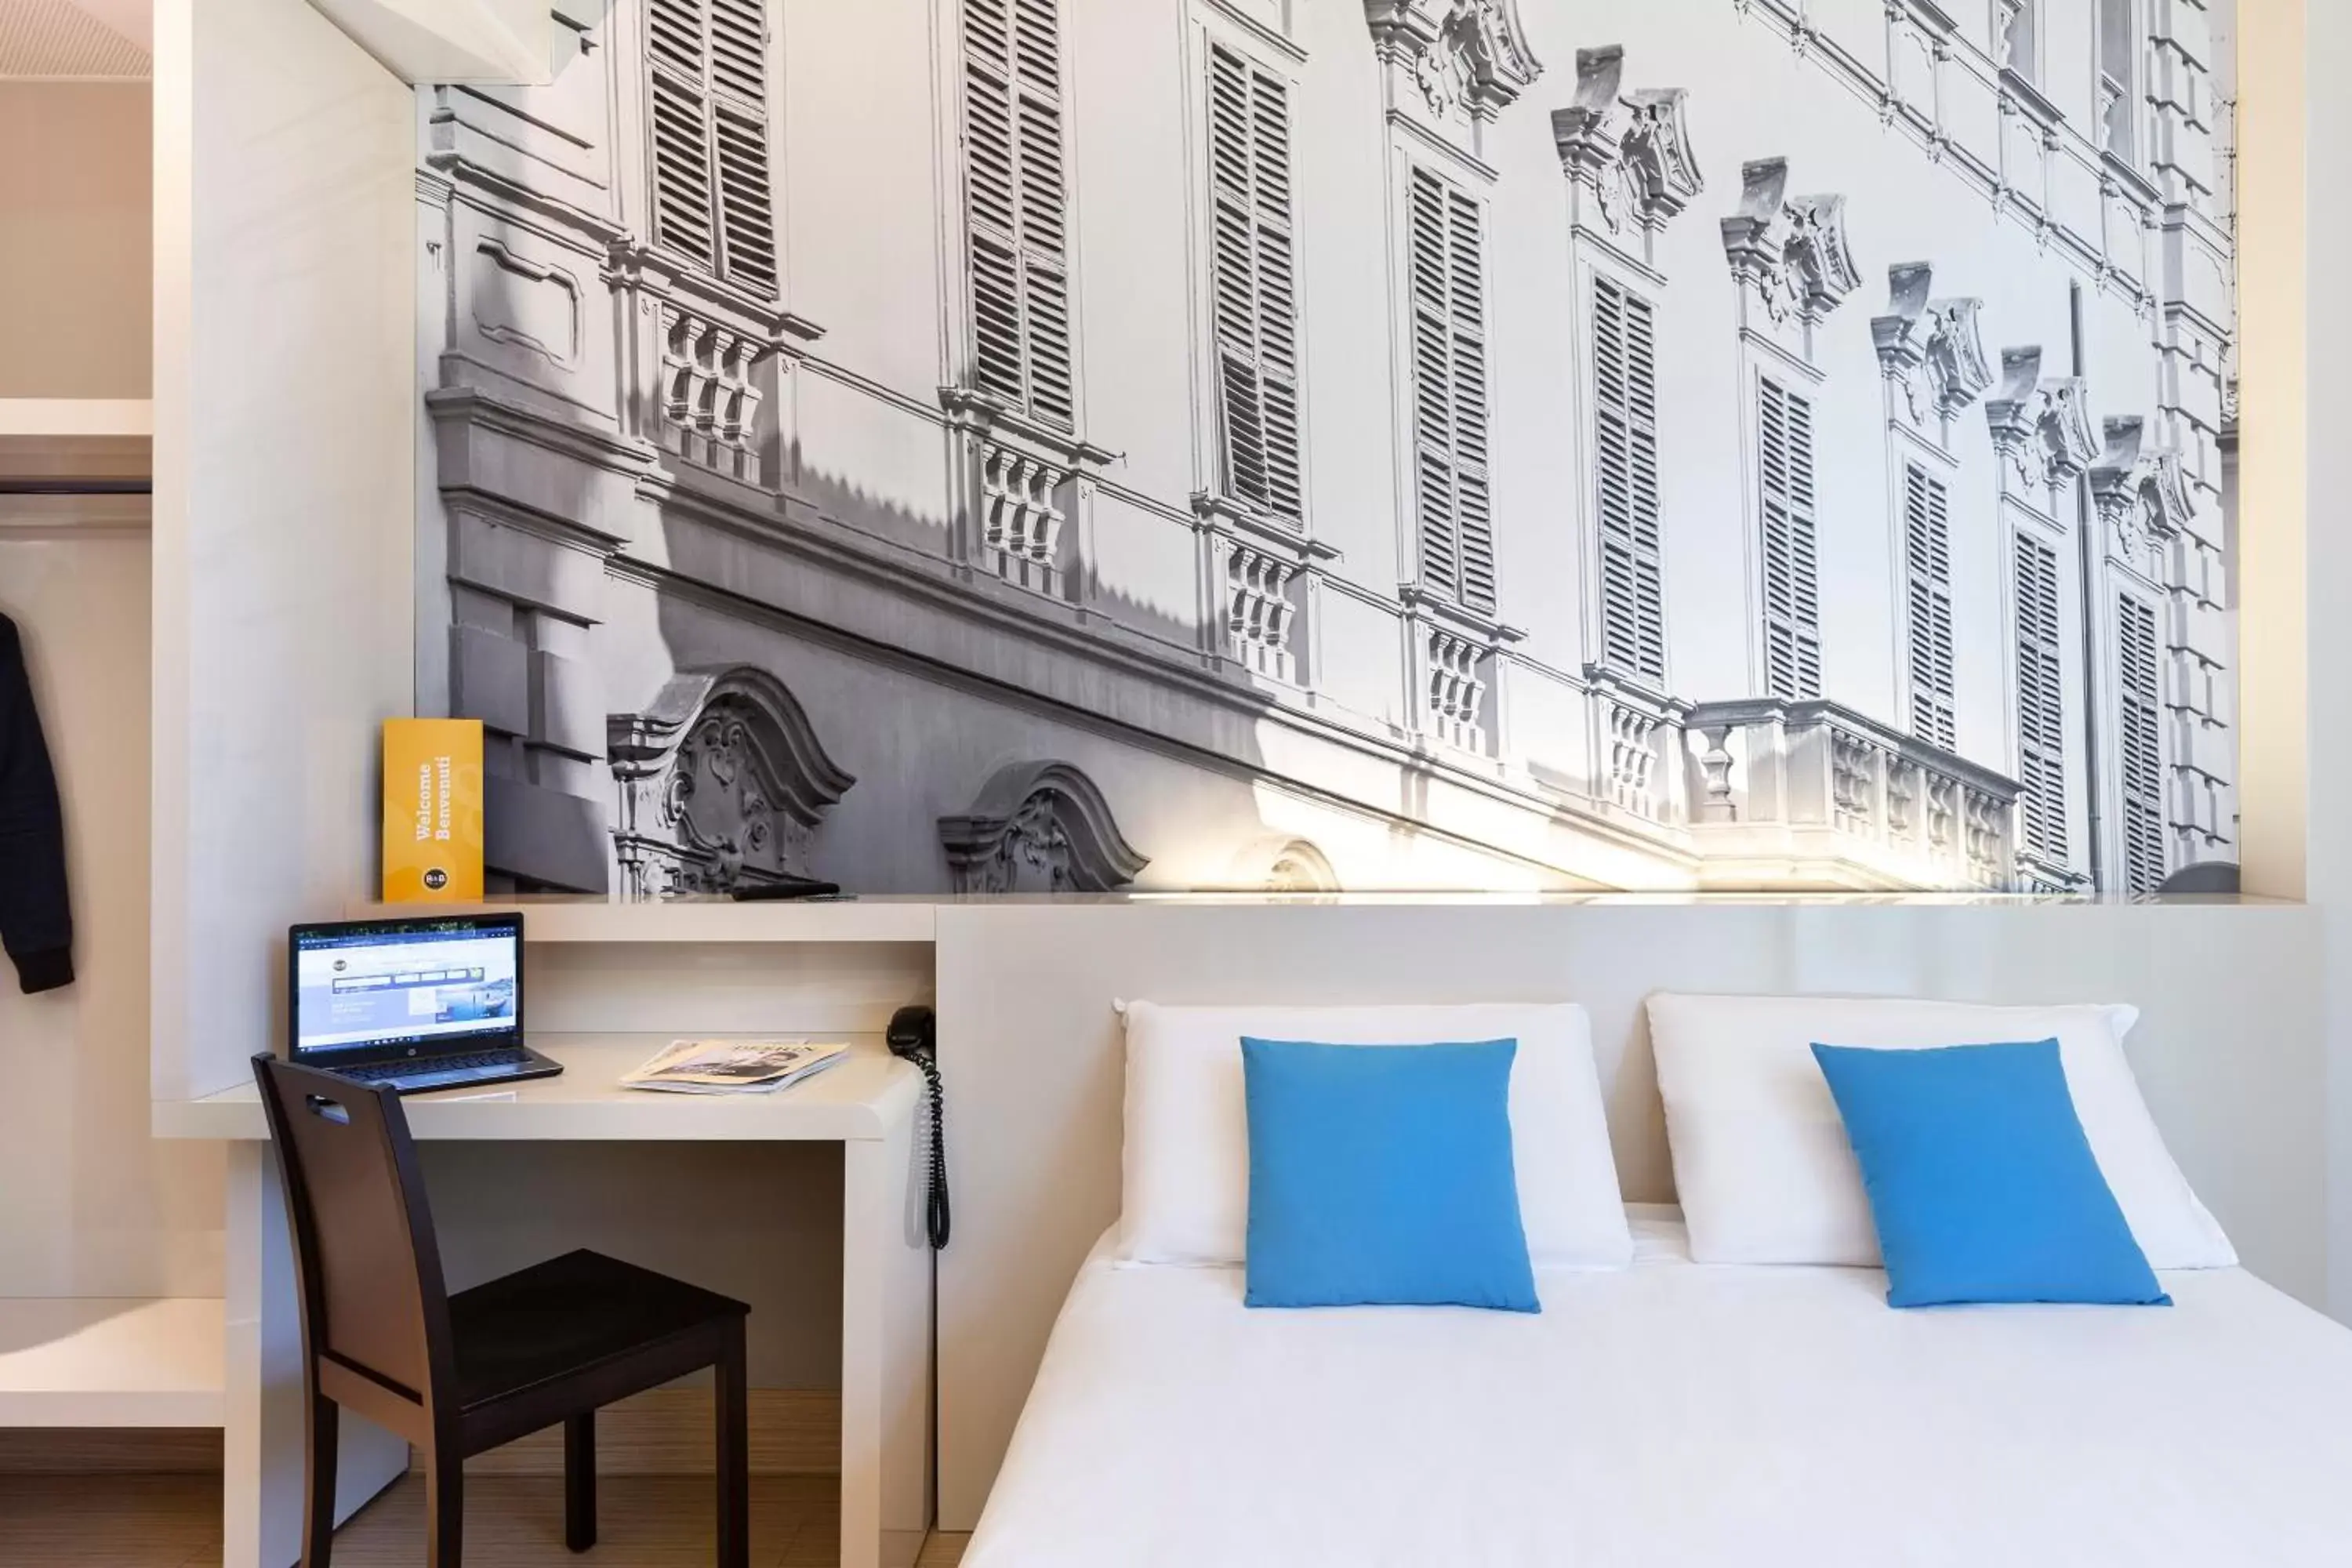 Bedroom, Bed in B&B Hotel Faenza